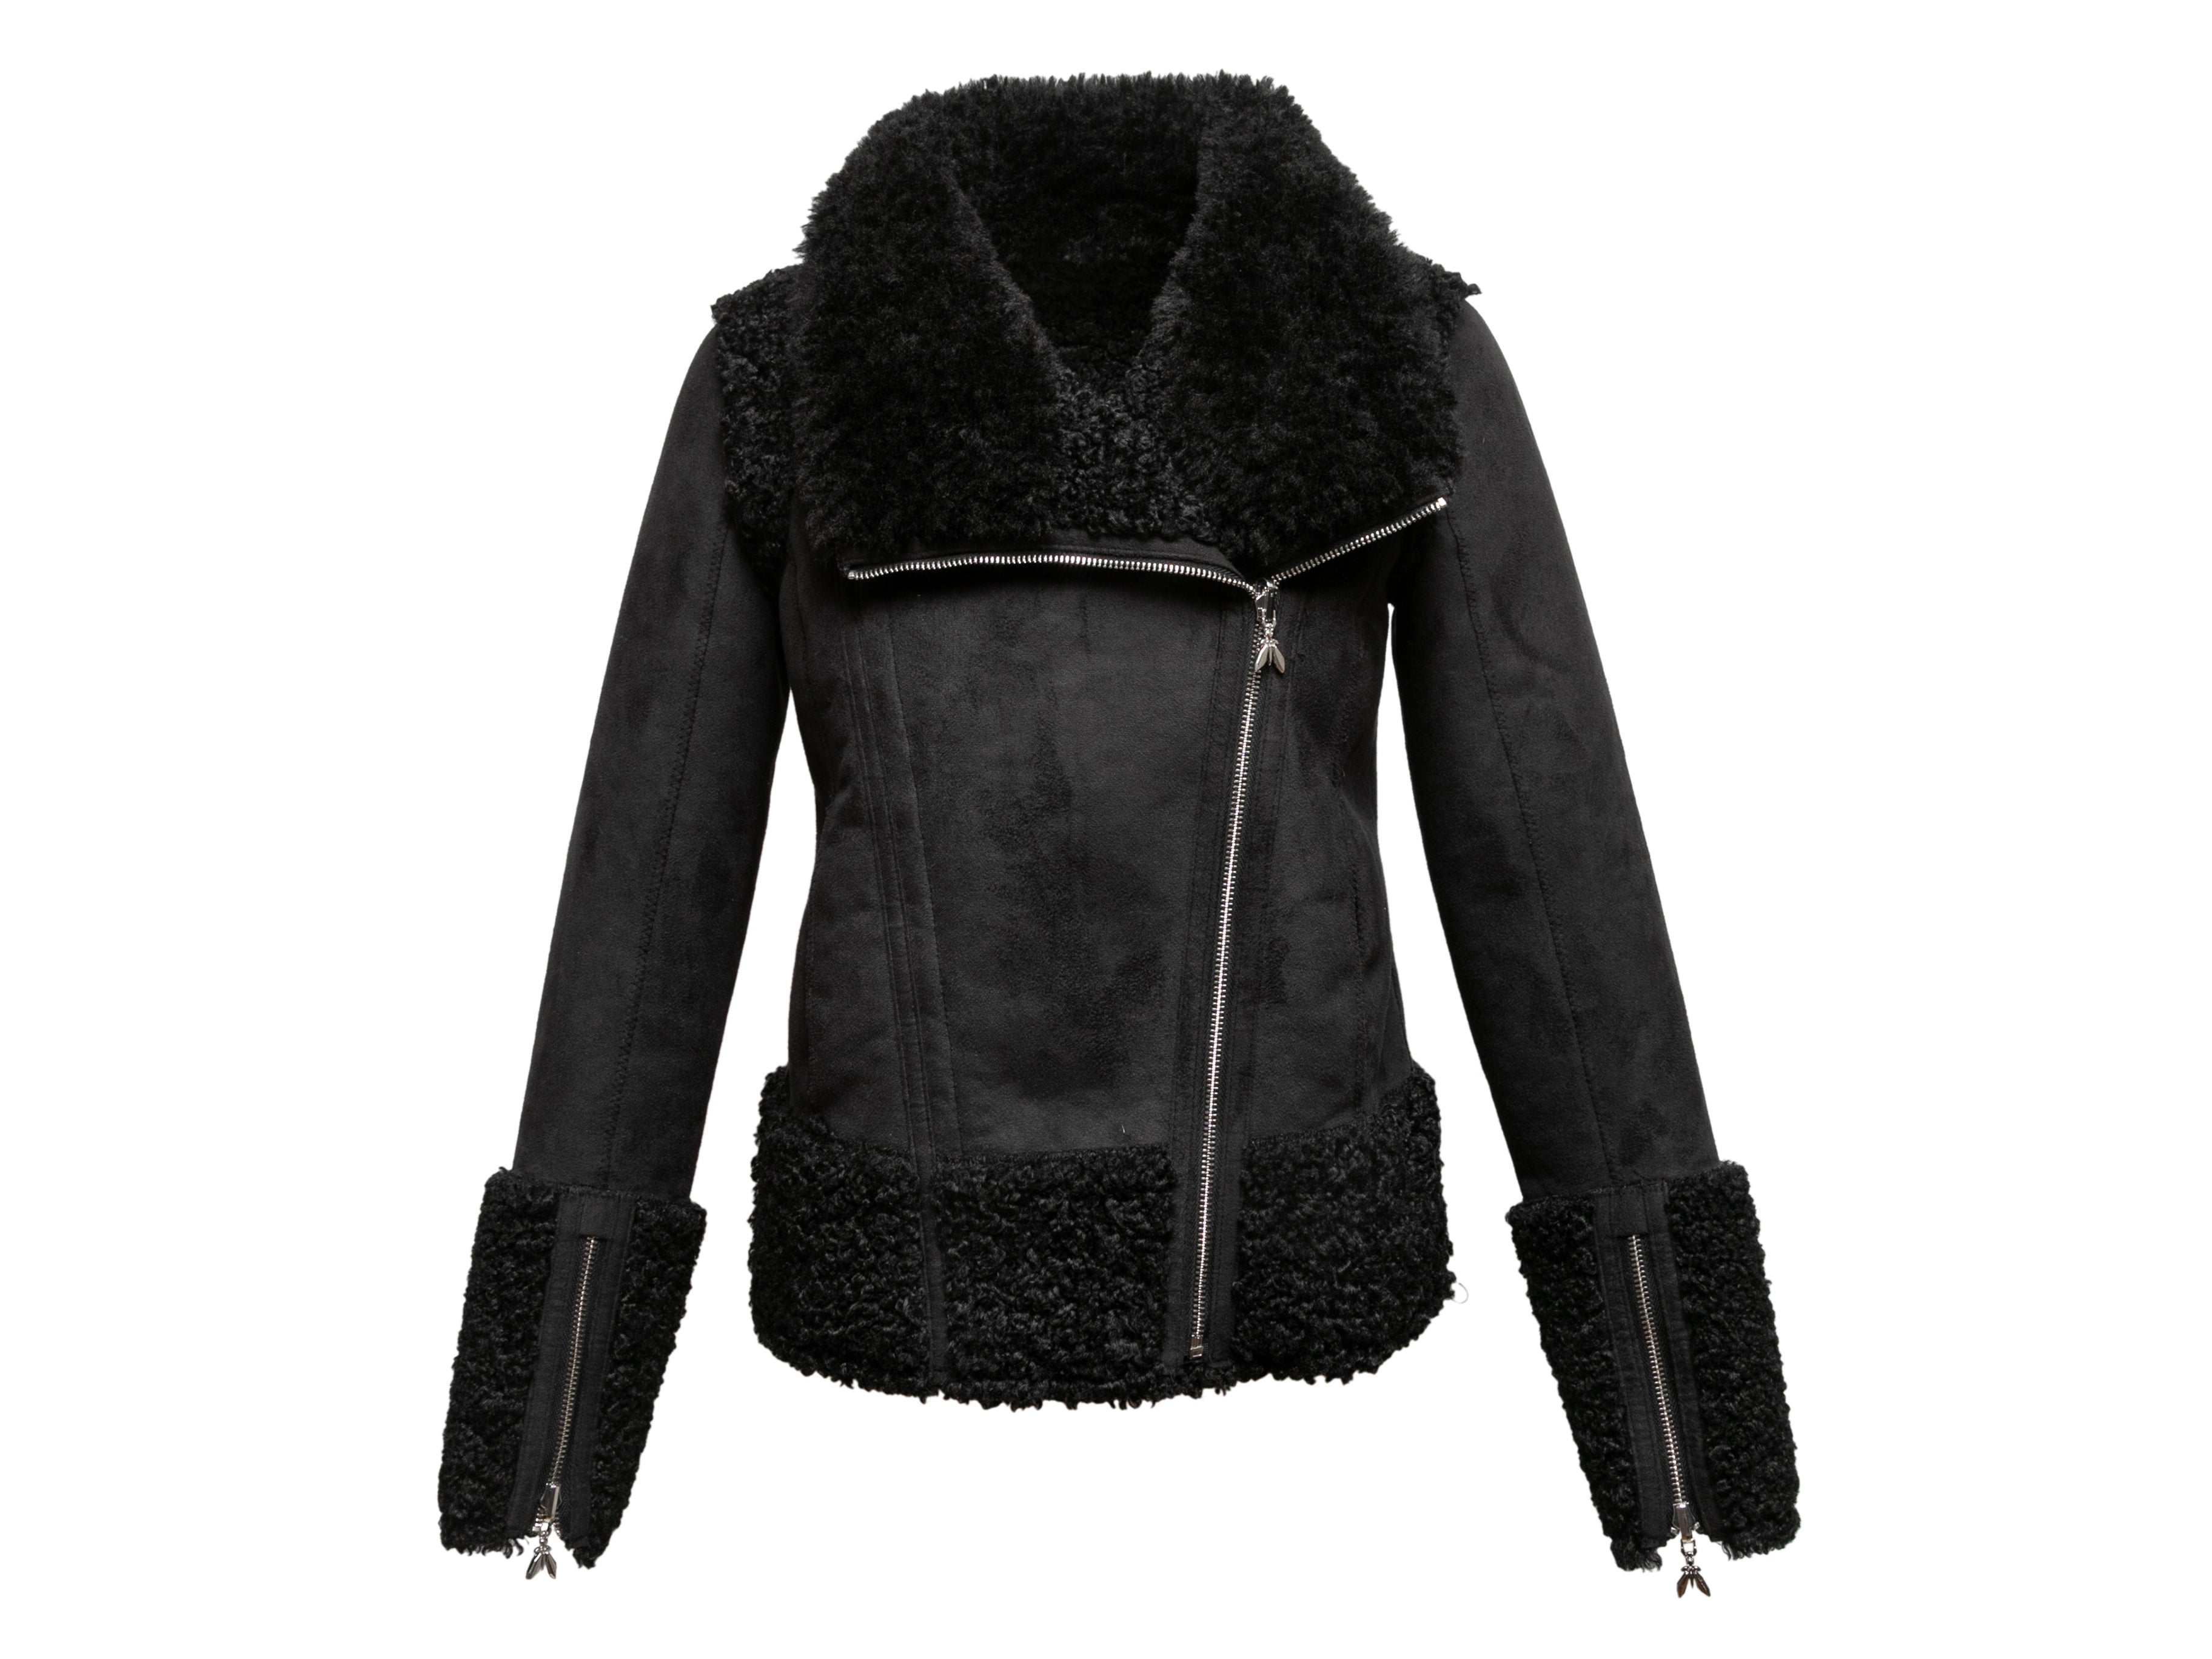 Guaranteed Authentic Louis Vuitton Shearling Fur JacketForeign